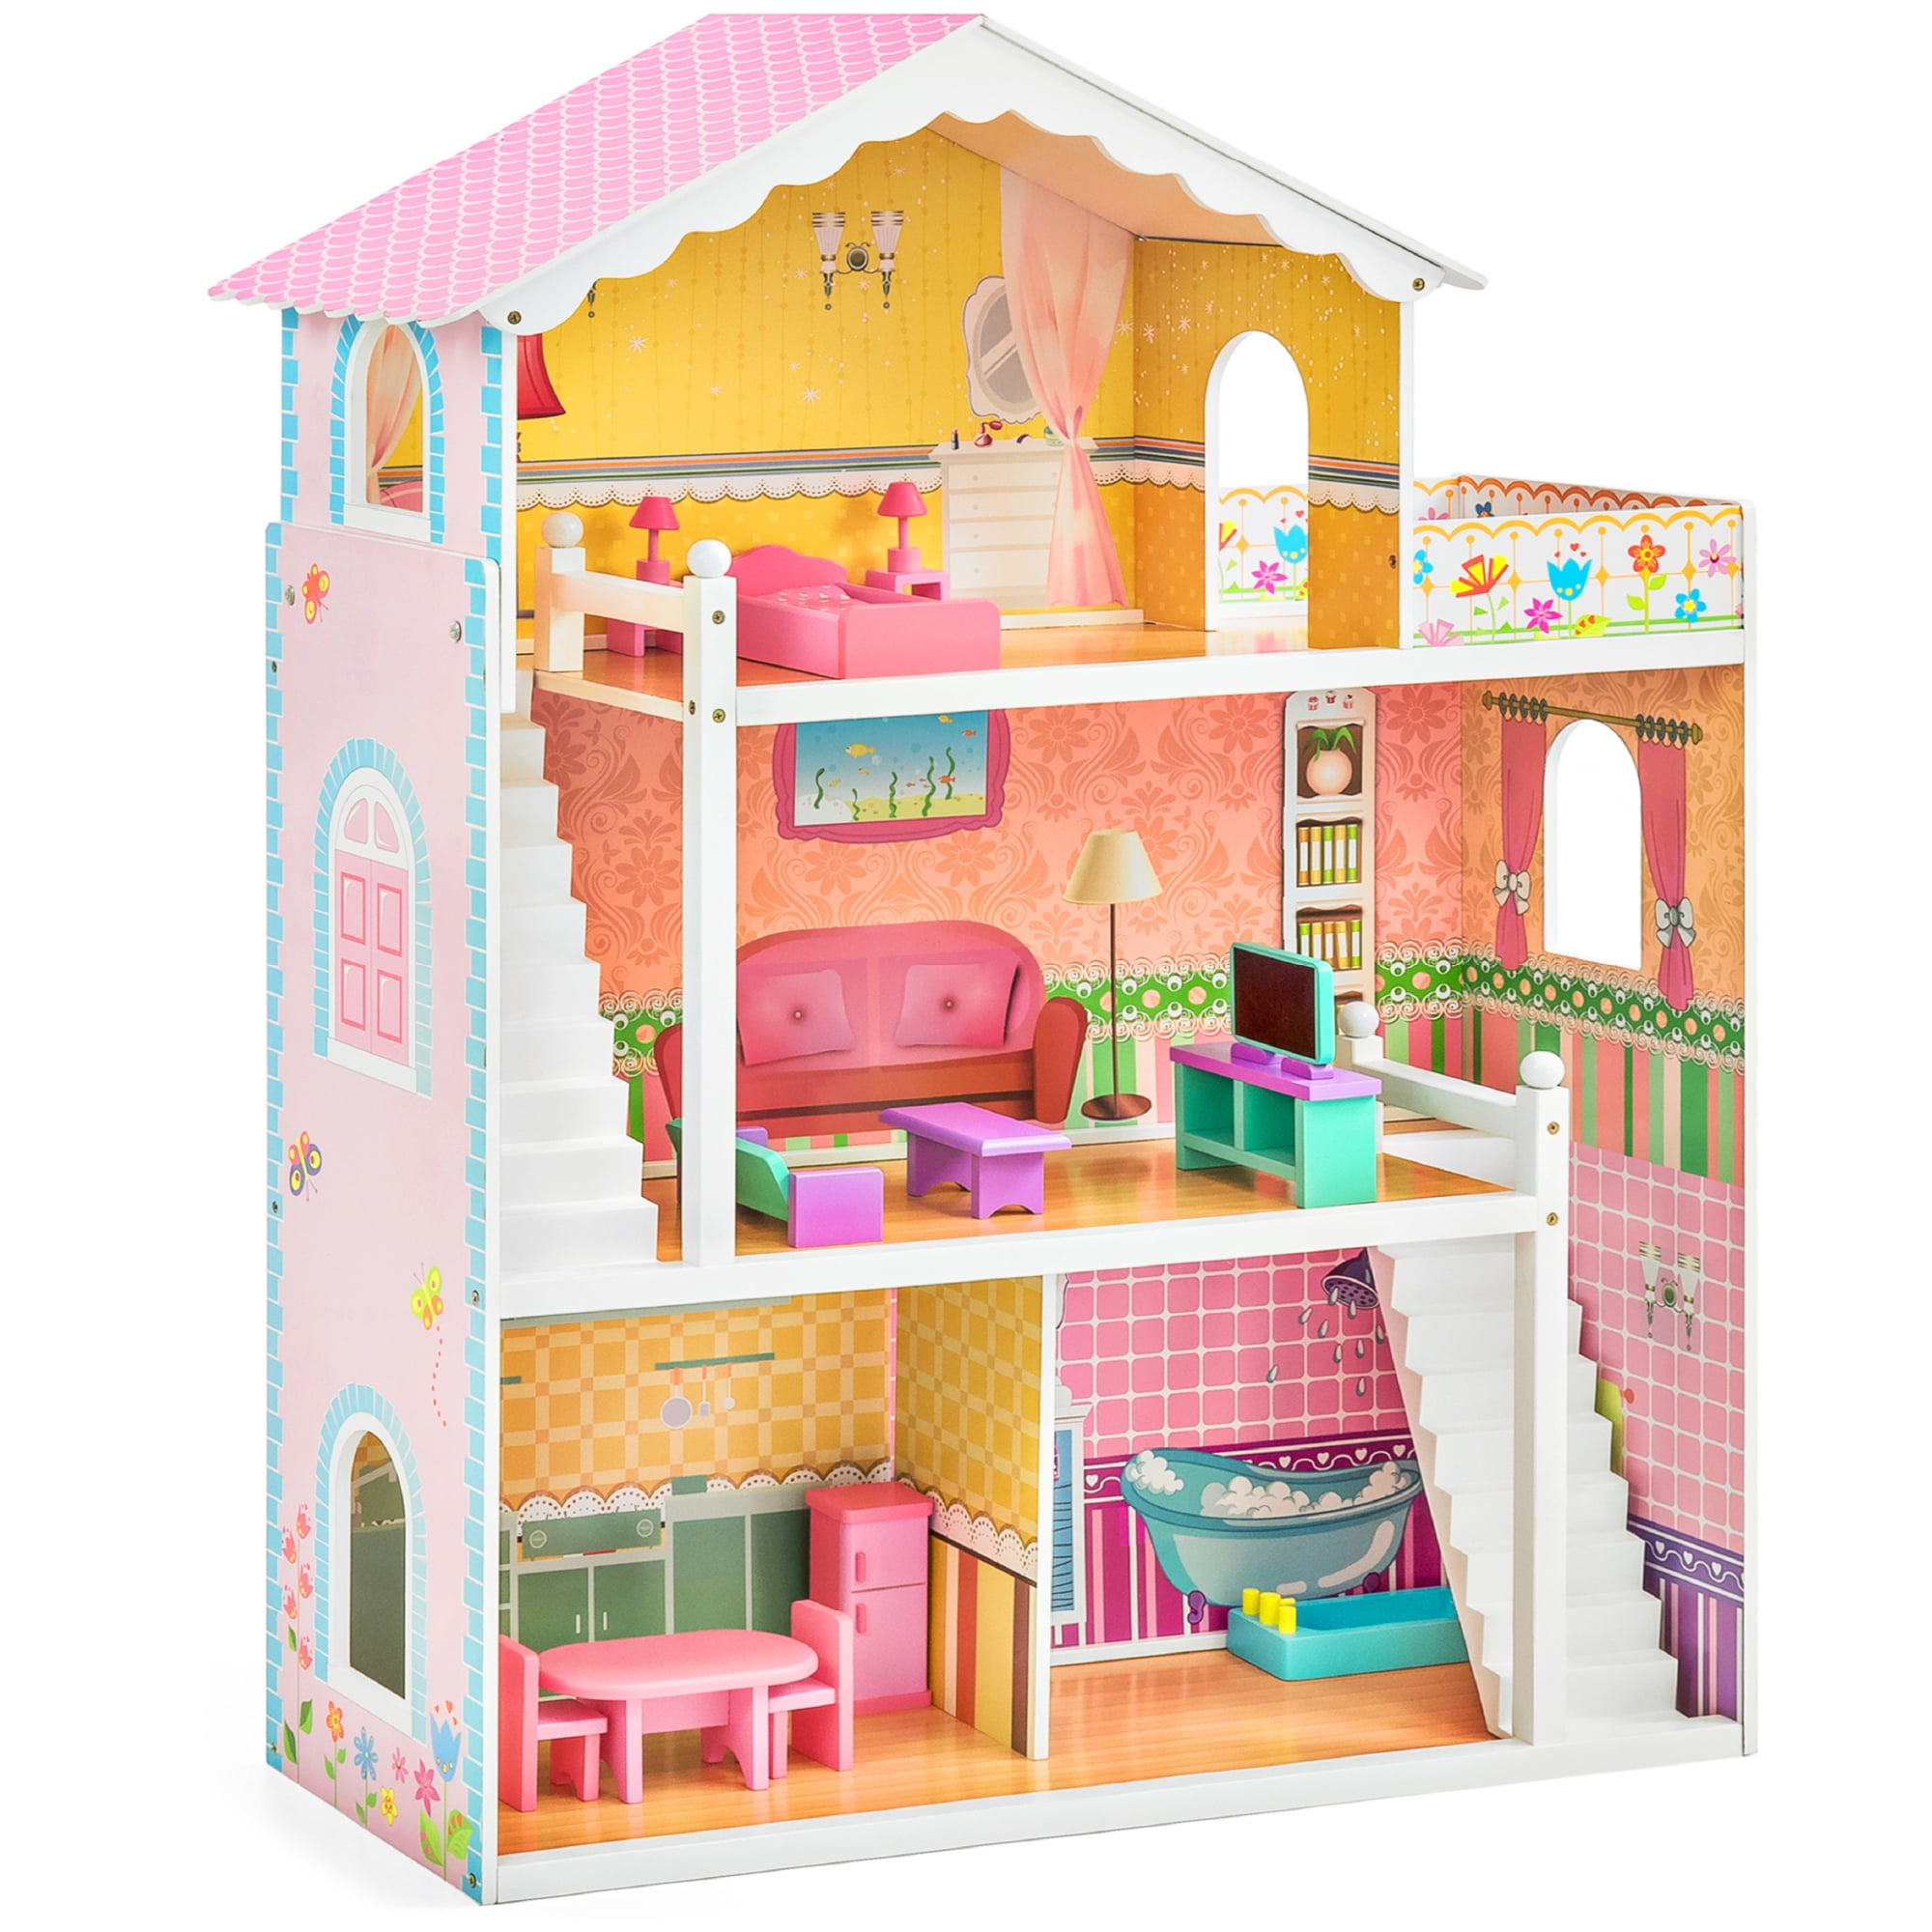 Handmade dollhouse miniature 1990’s Furby toy 1:12 